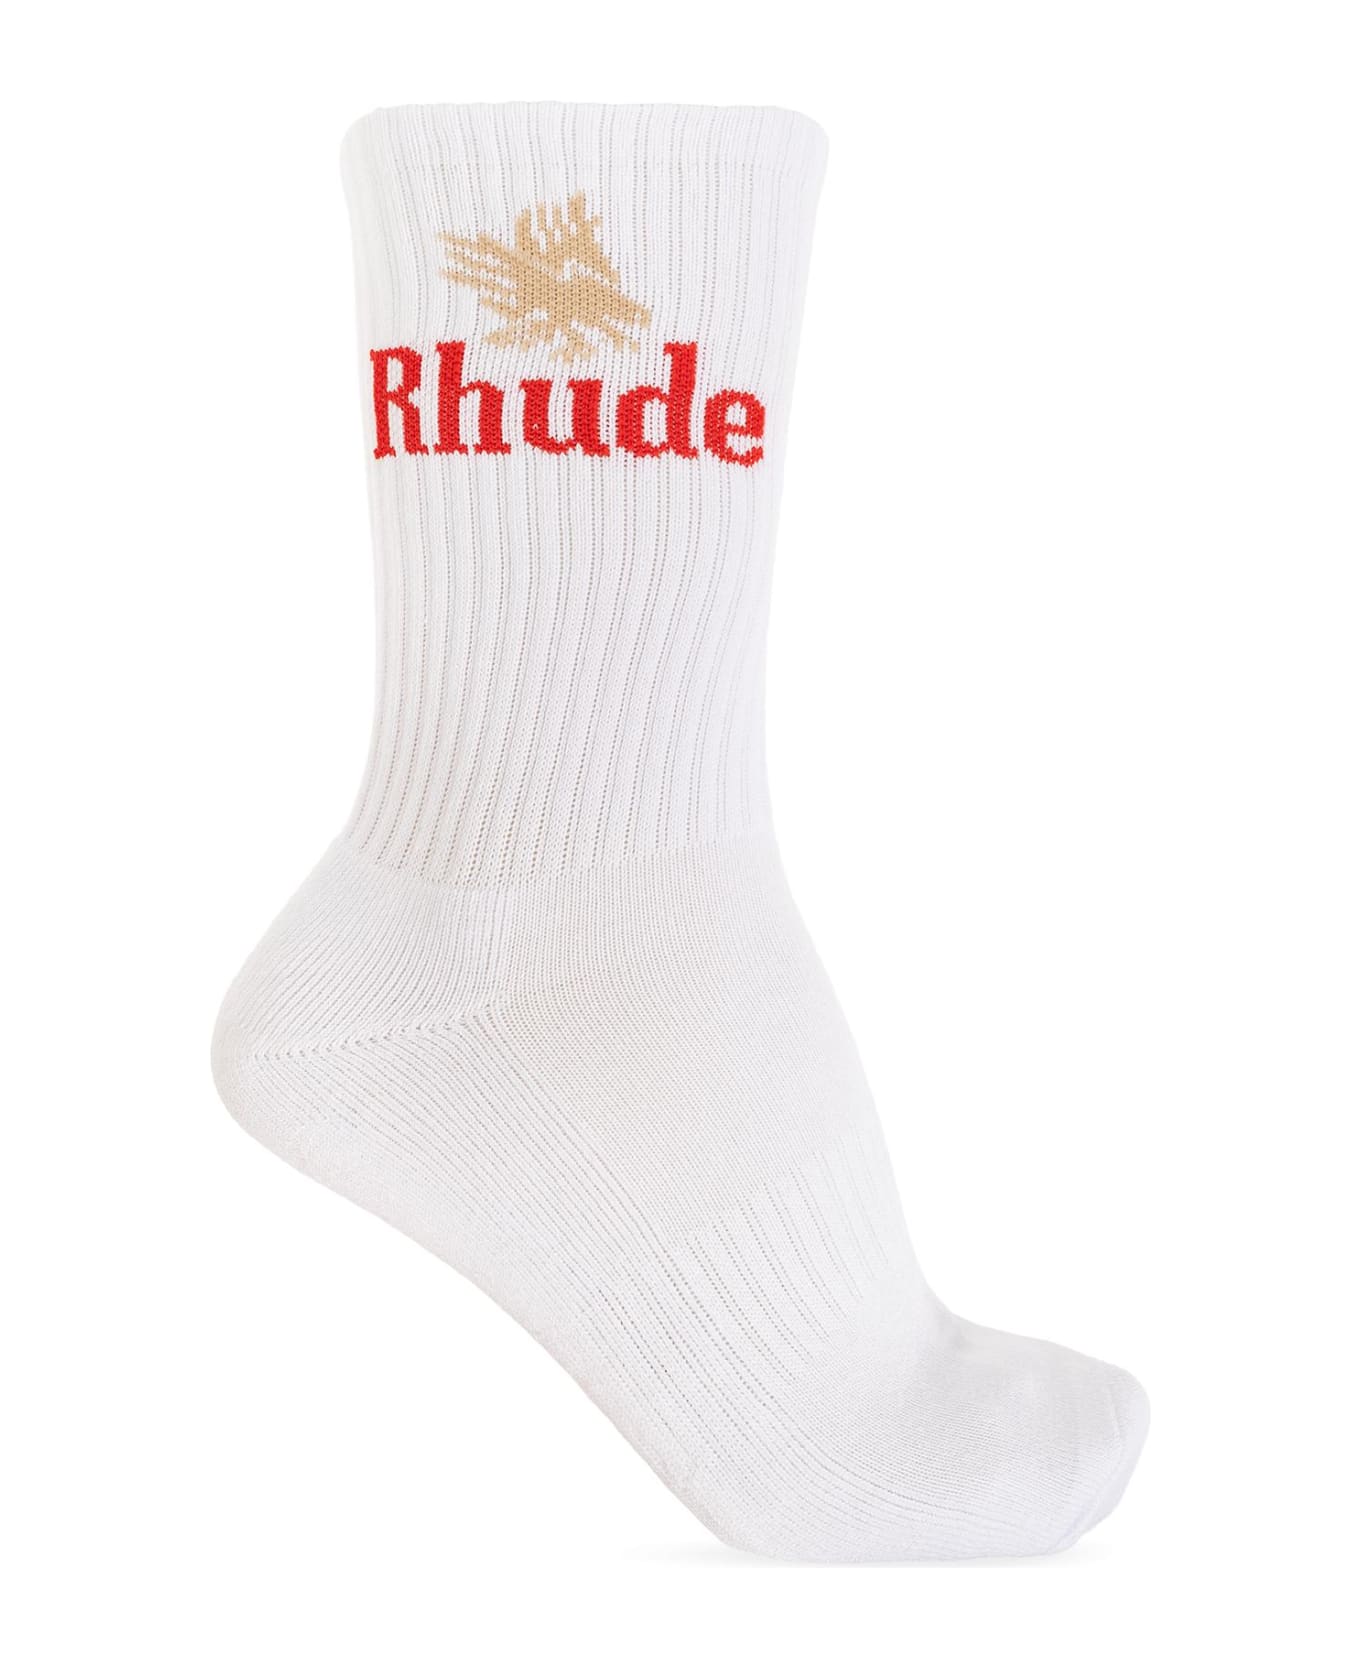 Rhude Socks With Logo - White